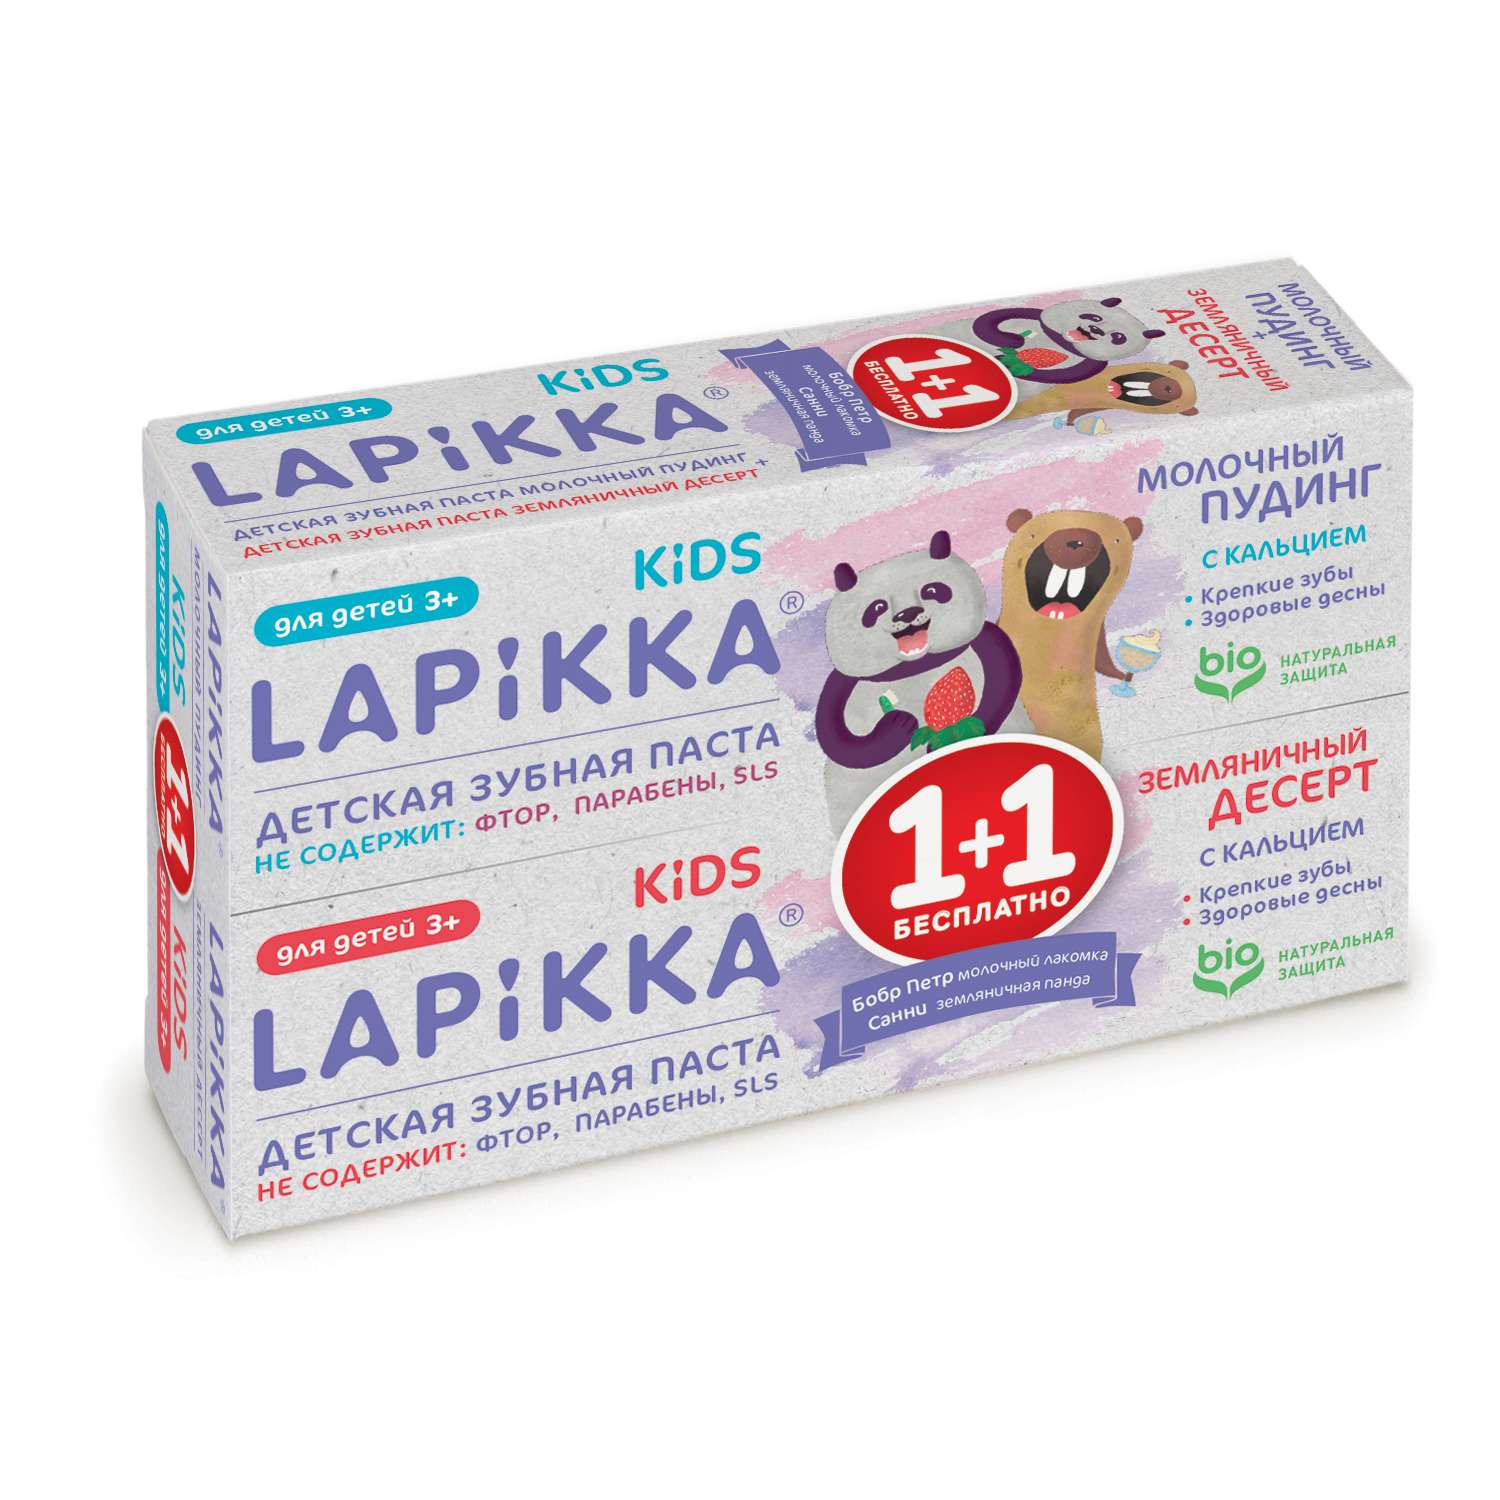 Набор Lapikka Kids Зубная паста Молочный пудинг с кальцием 45г и зубная паста Земляничный десерт с кальцием 45г Промо - фото 1